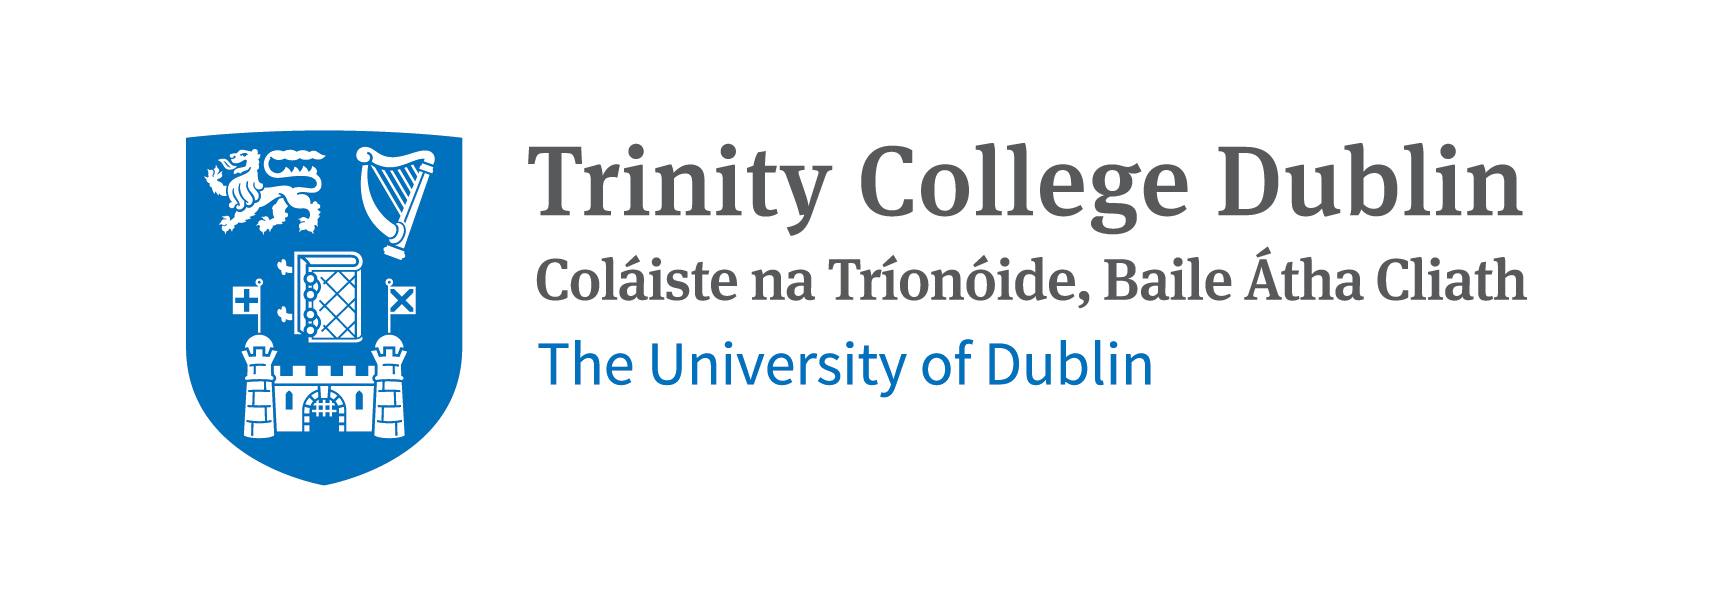 Trinity College Dublin, the University of Dublin logo